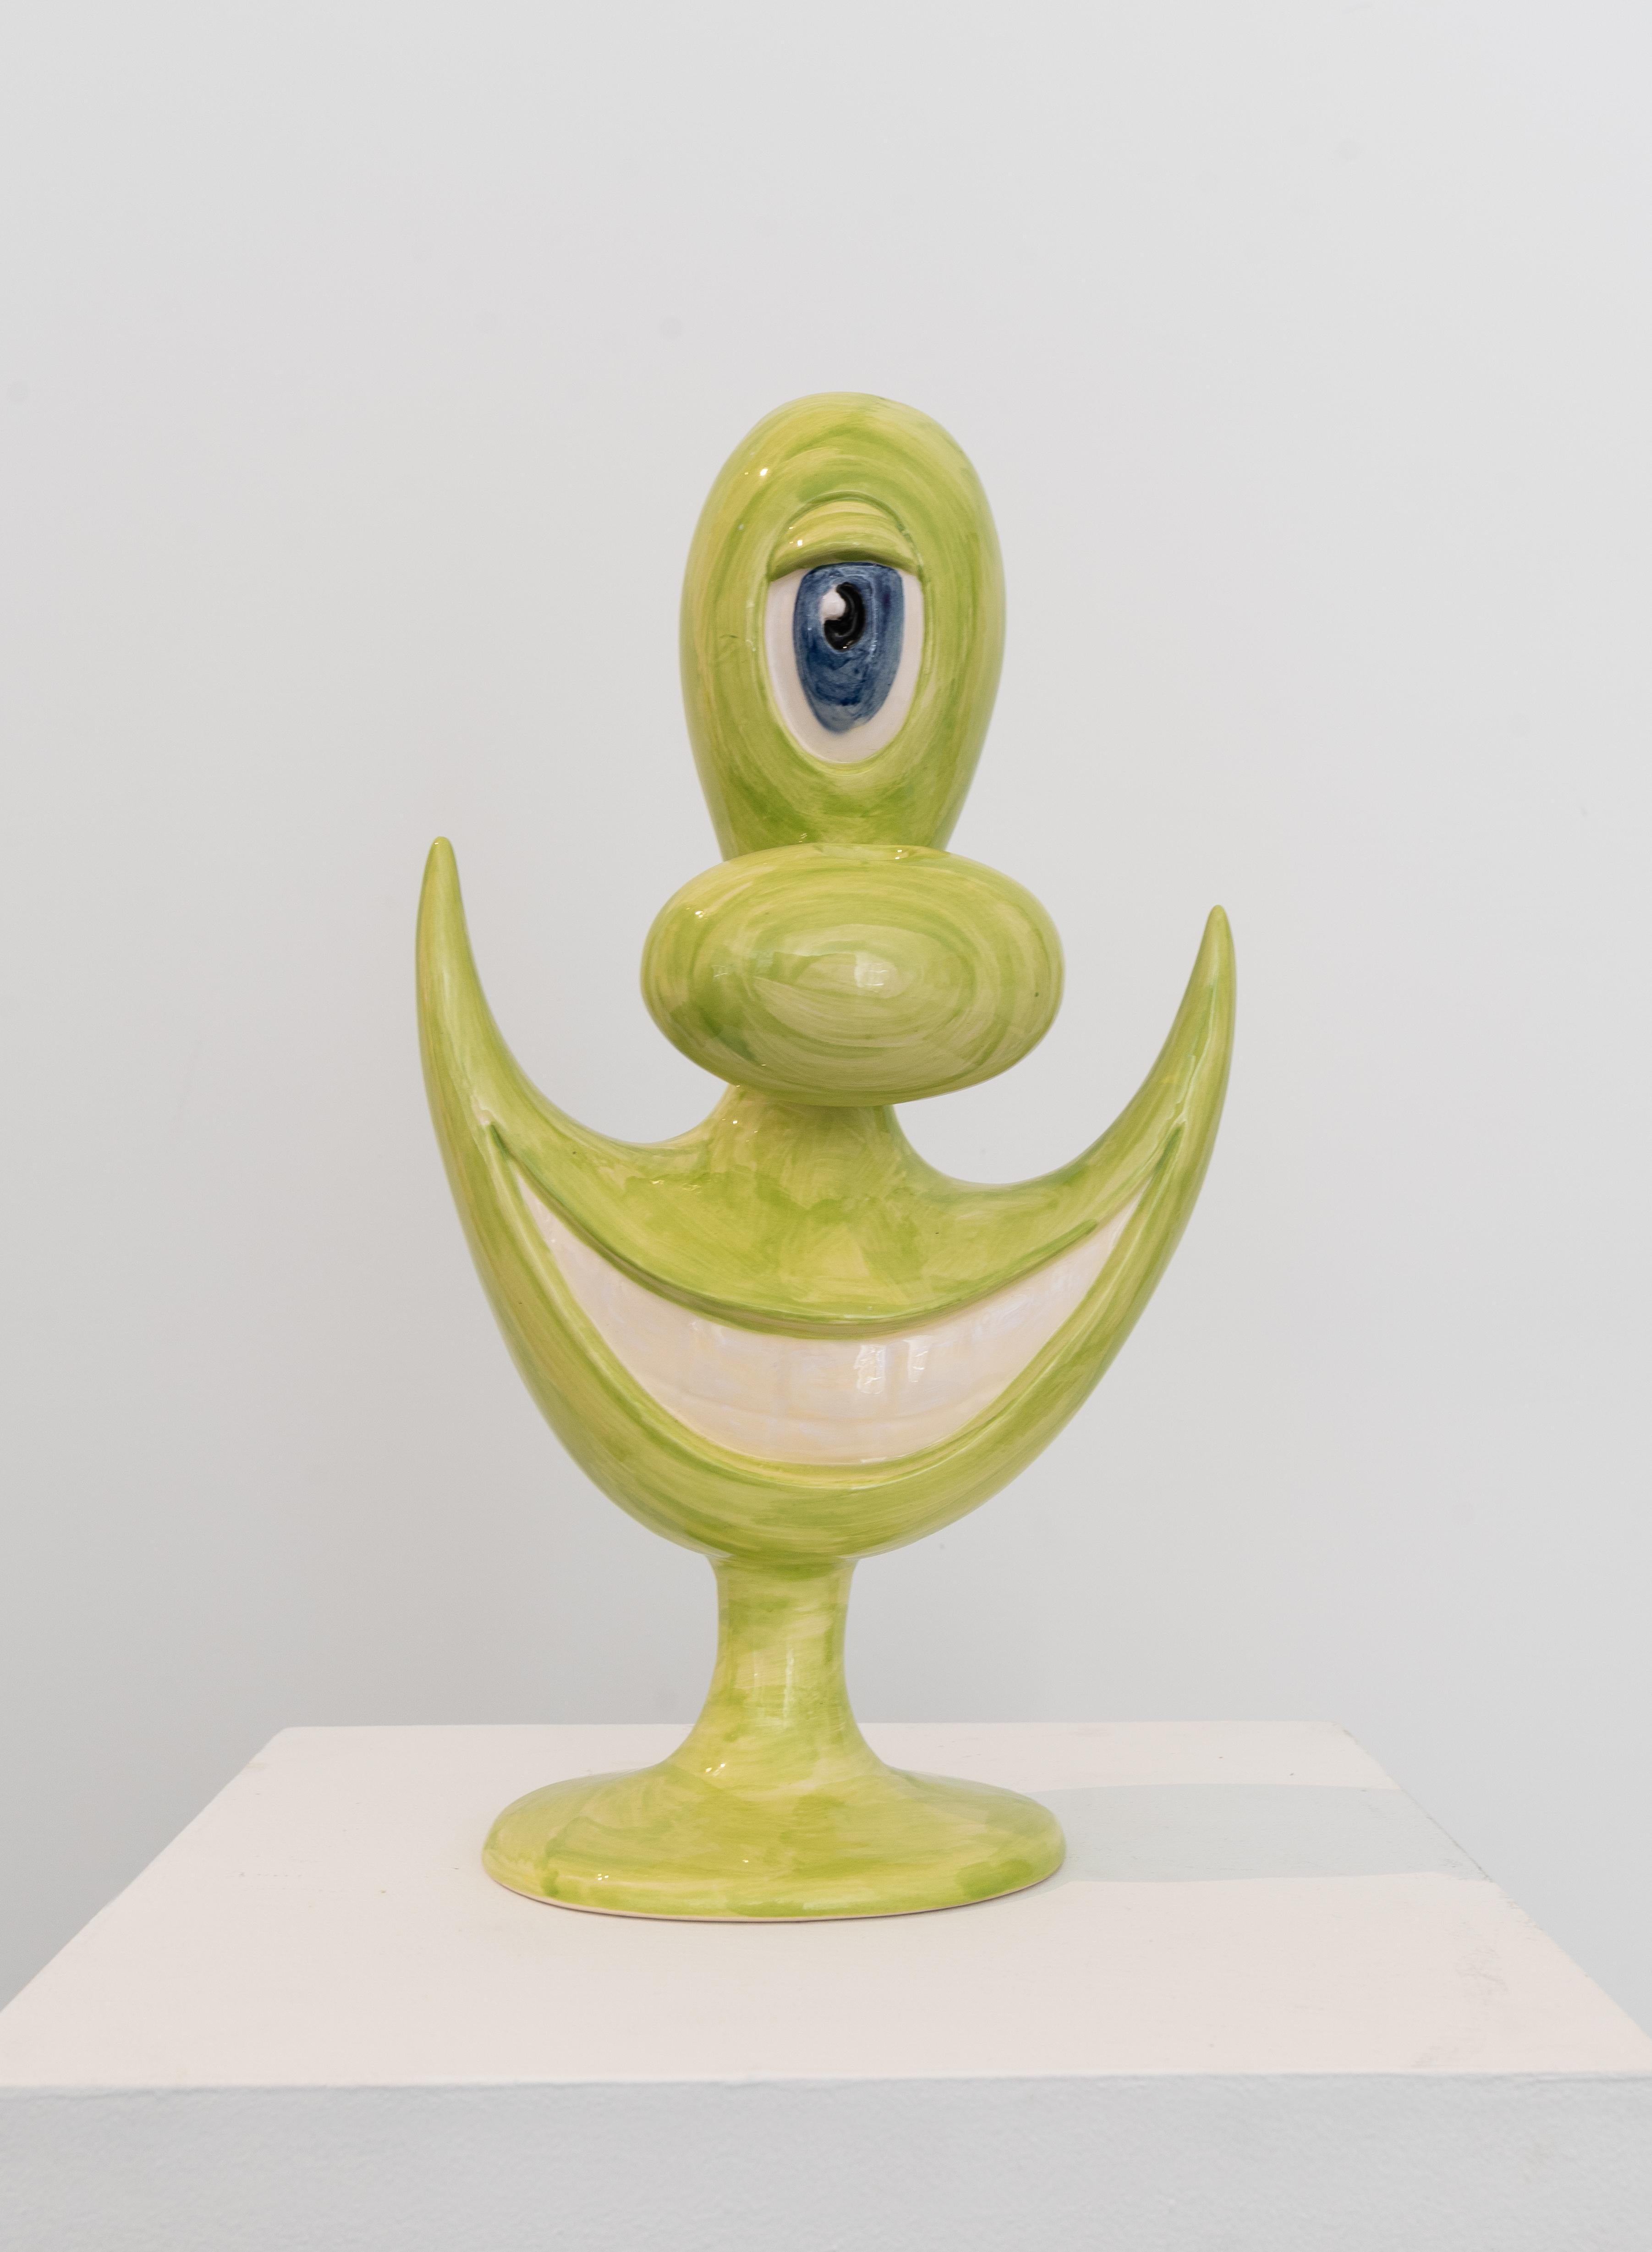 Kenny Scharf Figurative Sculpture - Object to Enjoy